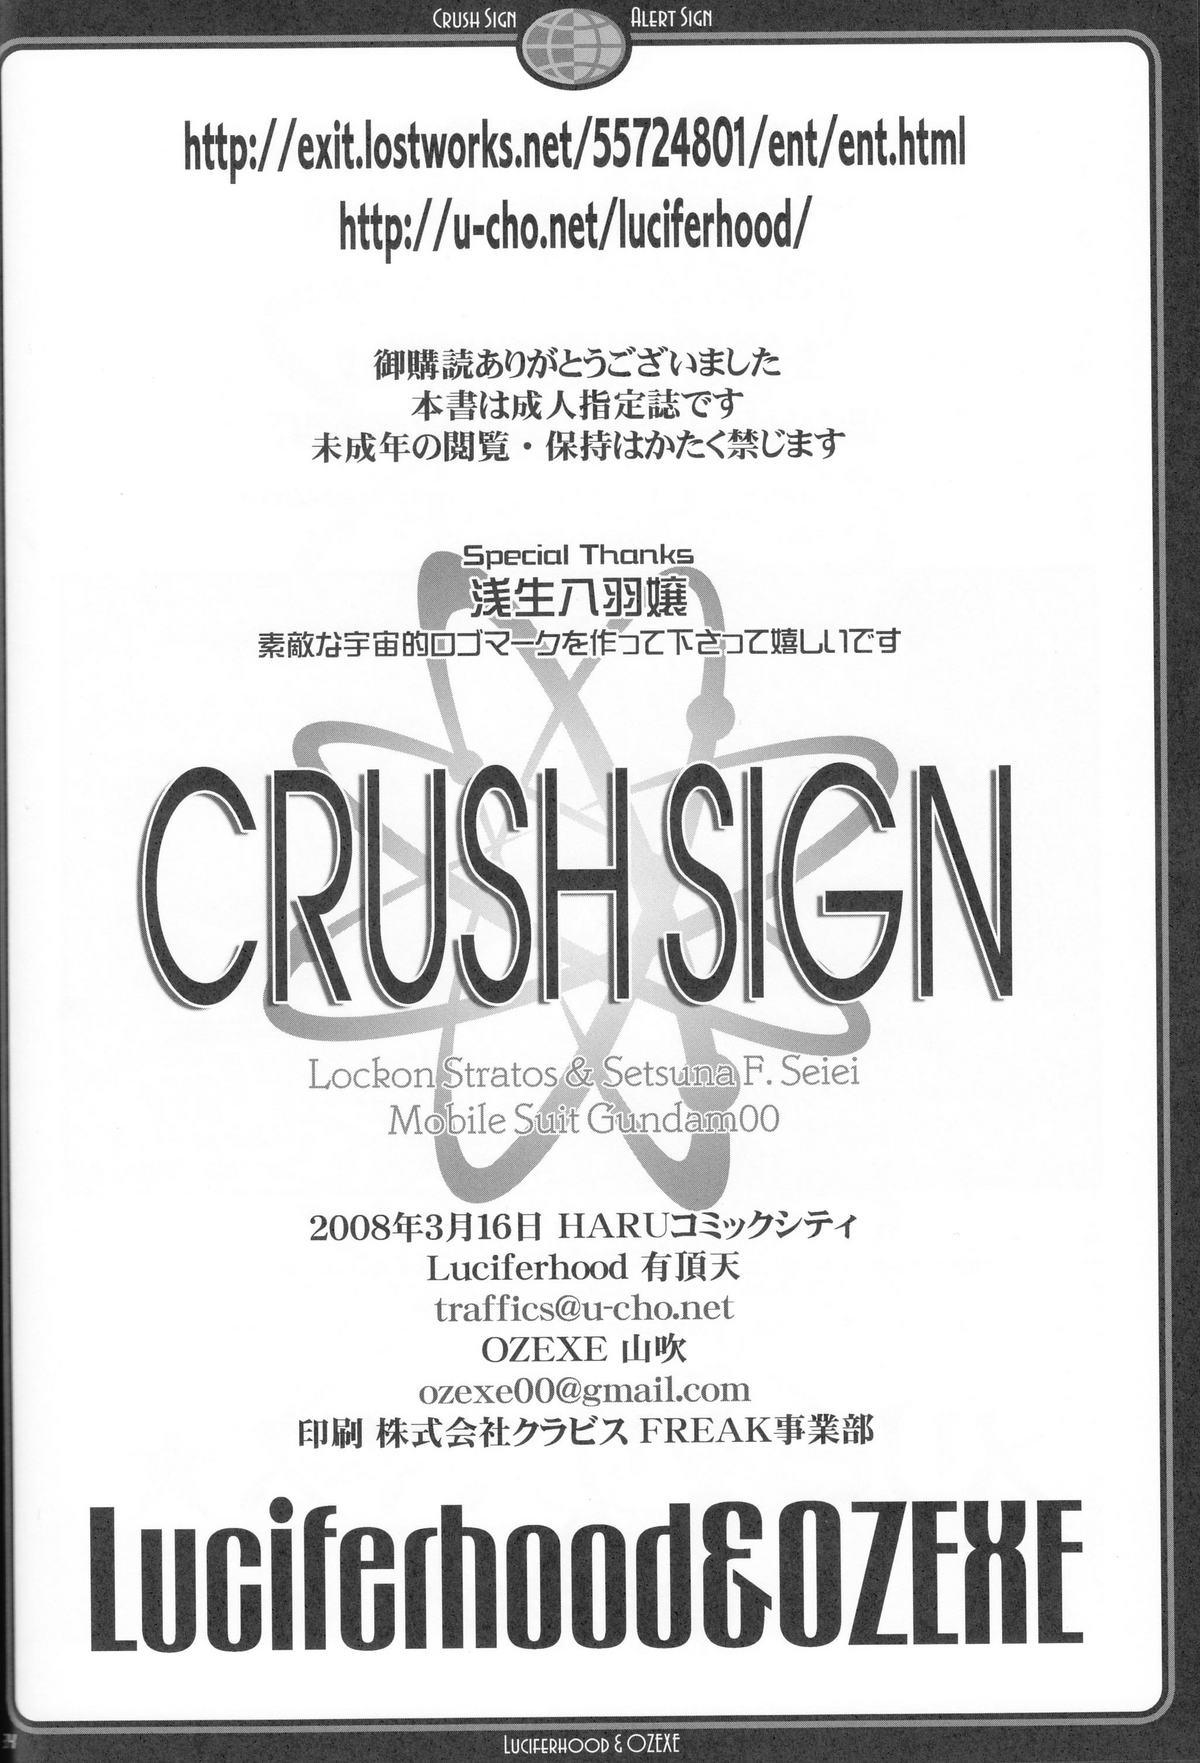 Crush Sign 32